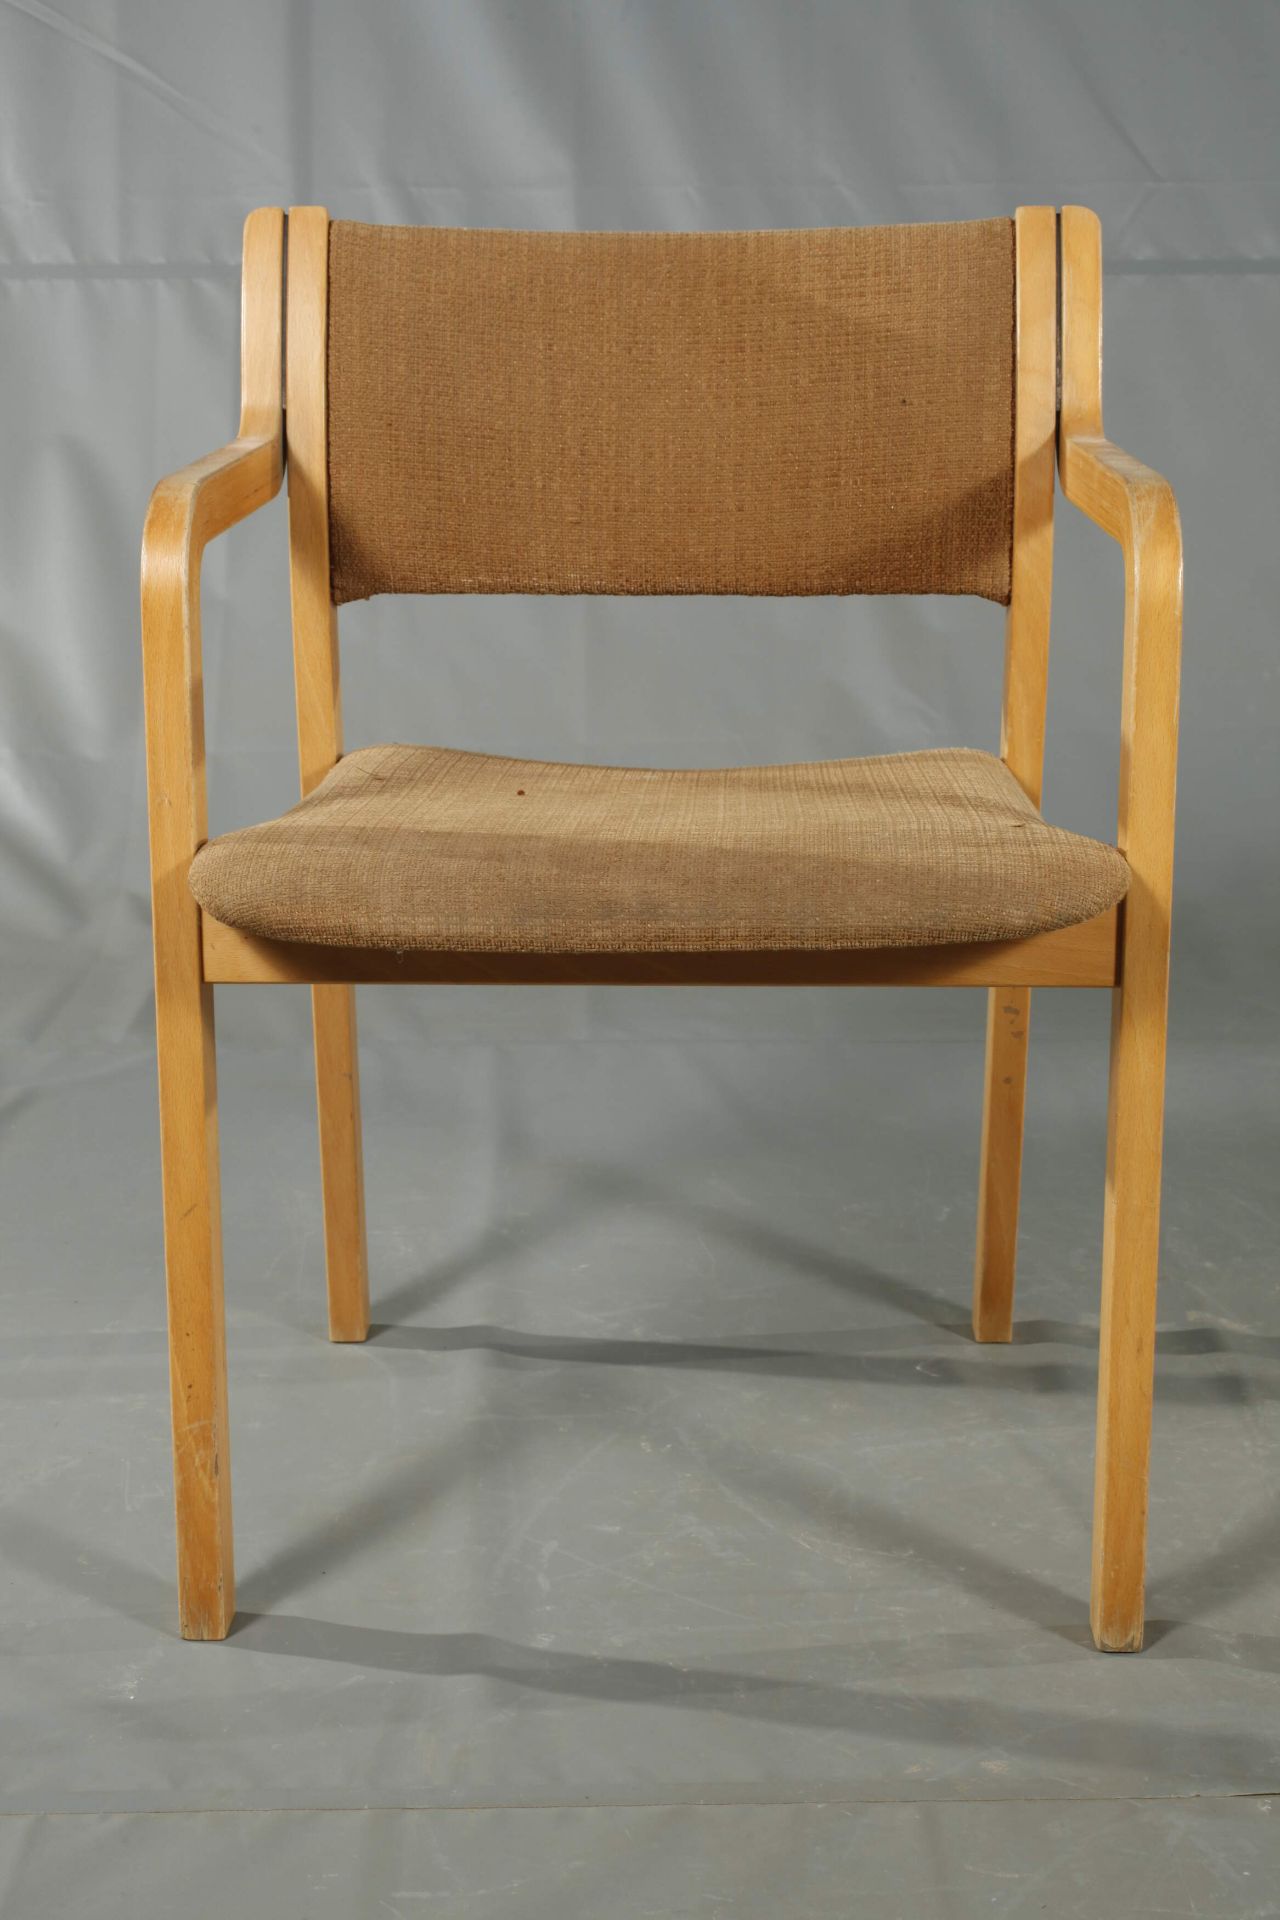 Three chairs Denmark - Image 3 of 7